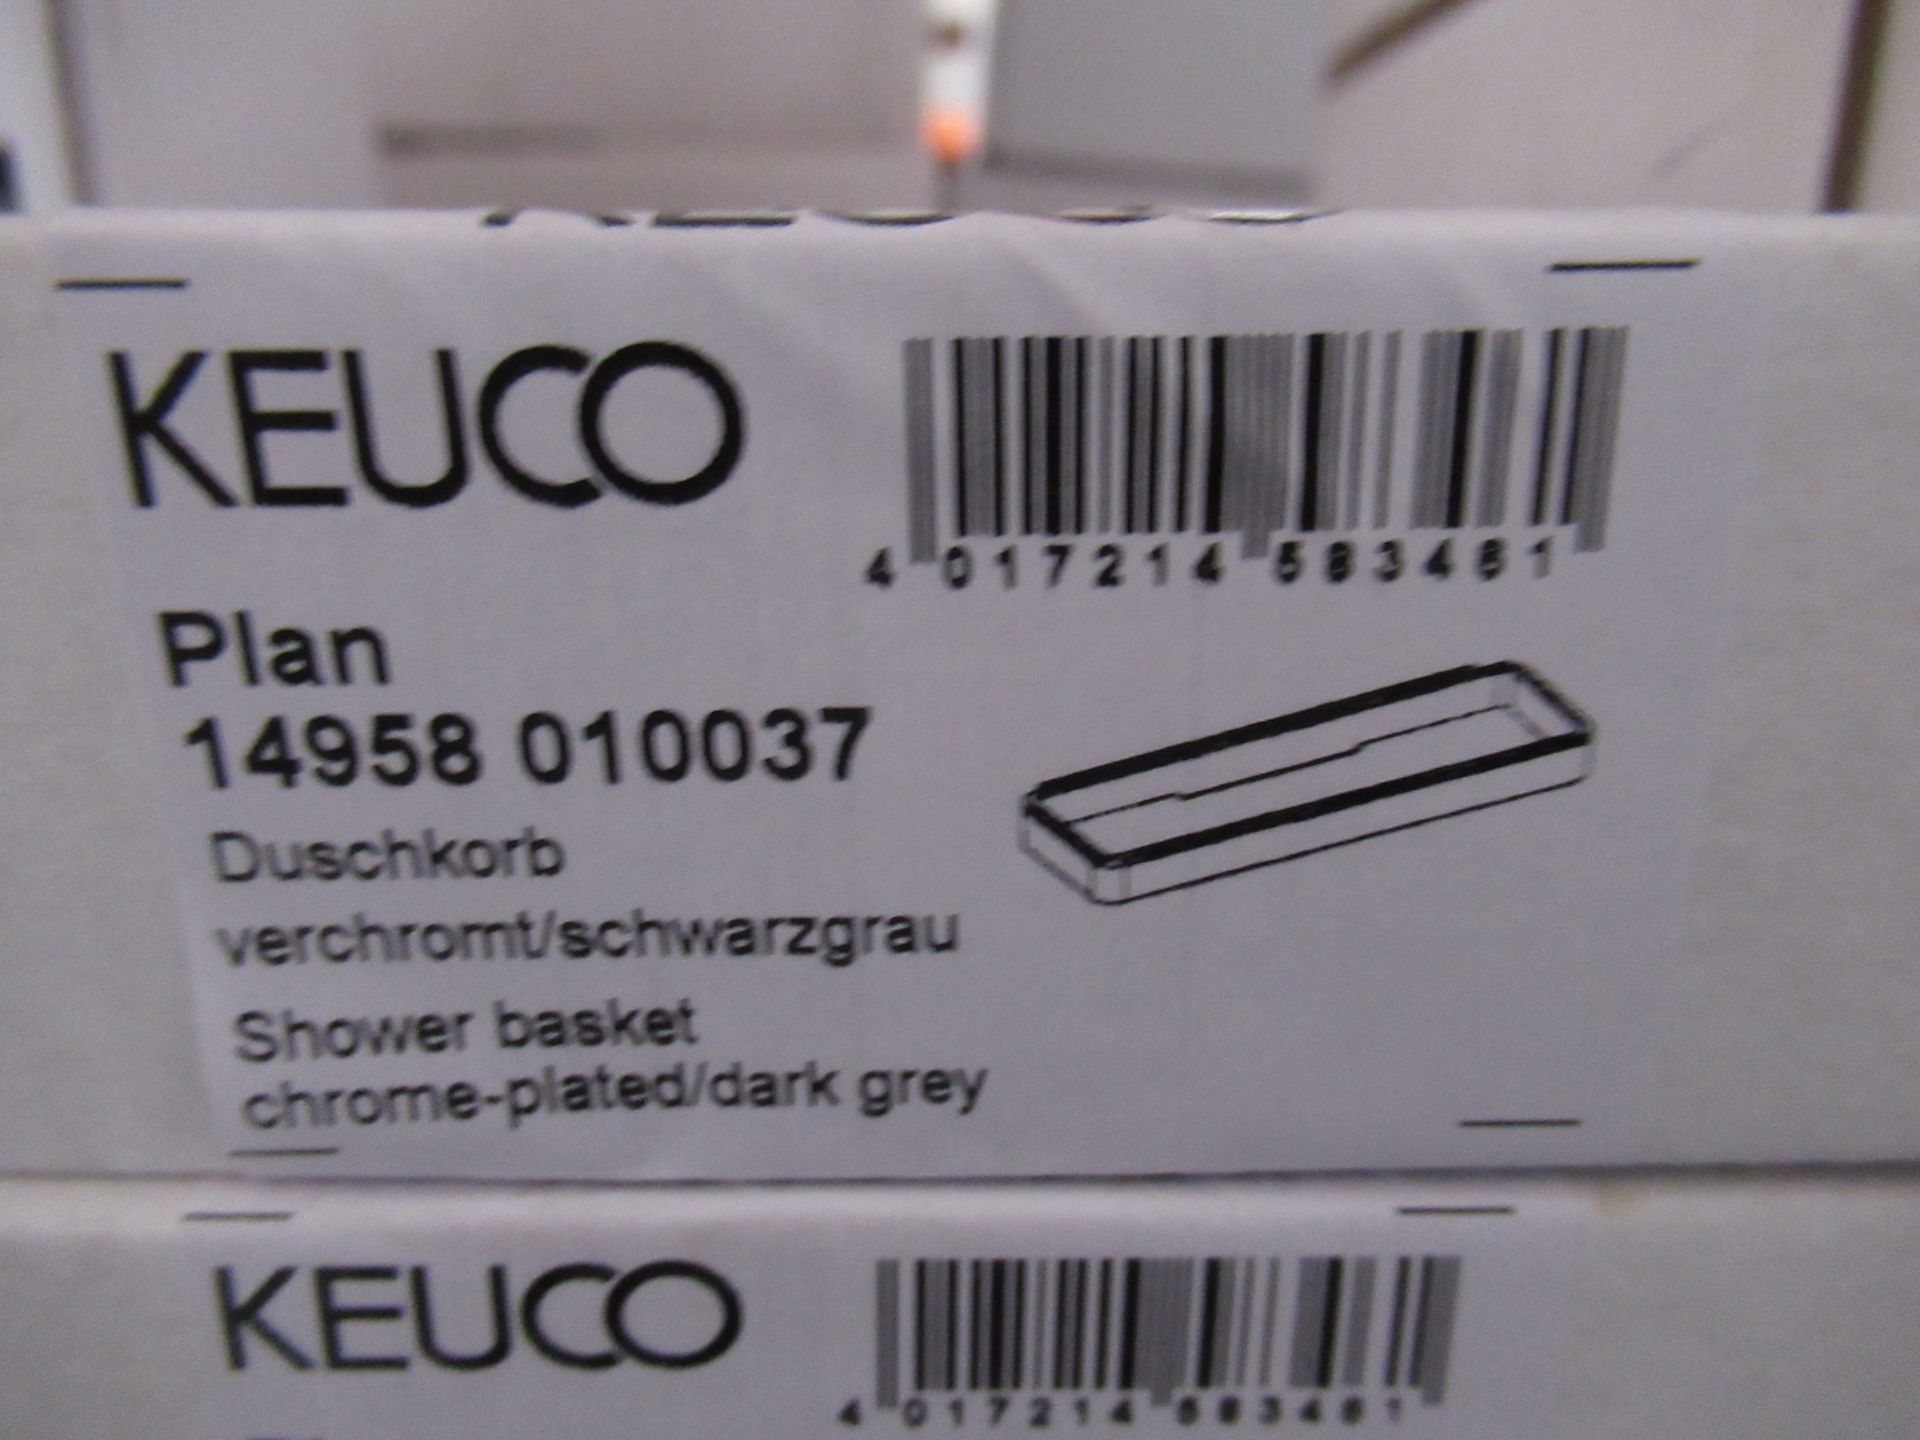 2 x Keuco Plan Shower Baskets Chrome Plated/Dark Grey P/N14958-010037 - Image 2 of 2